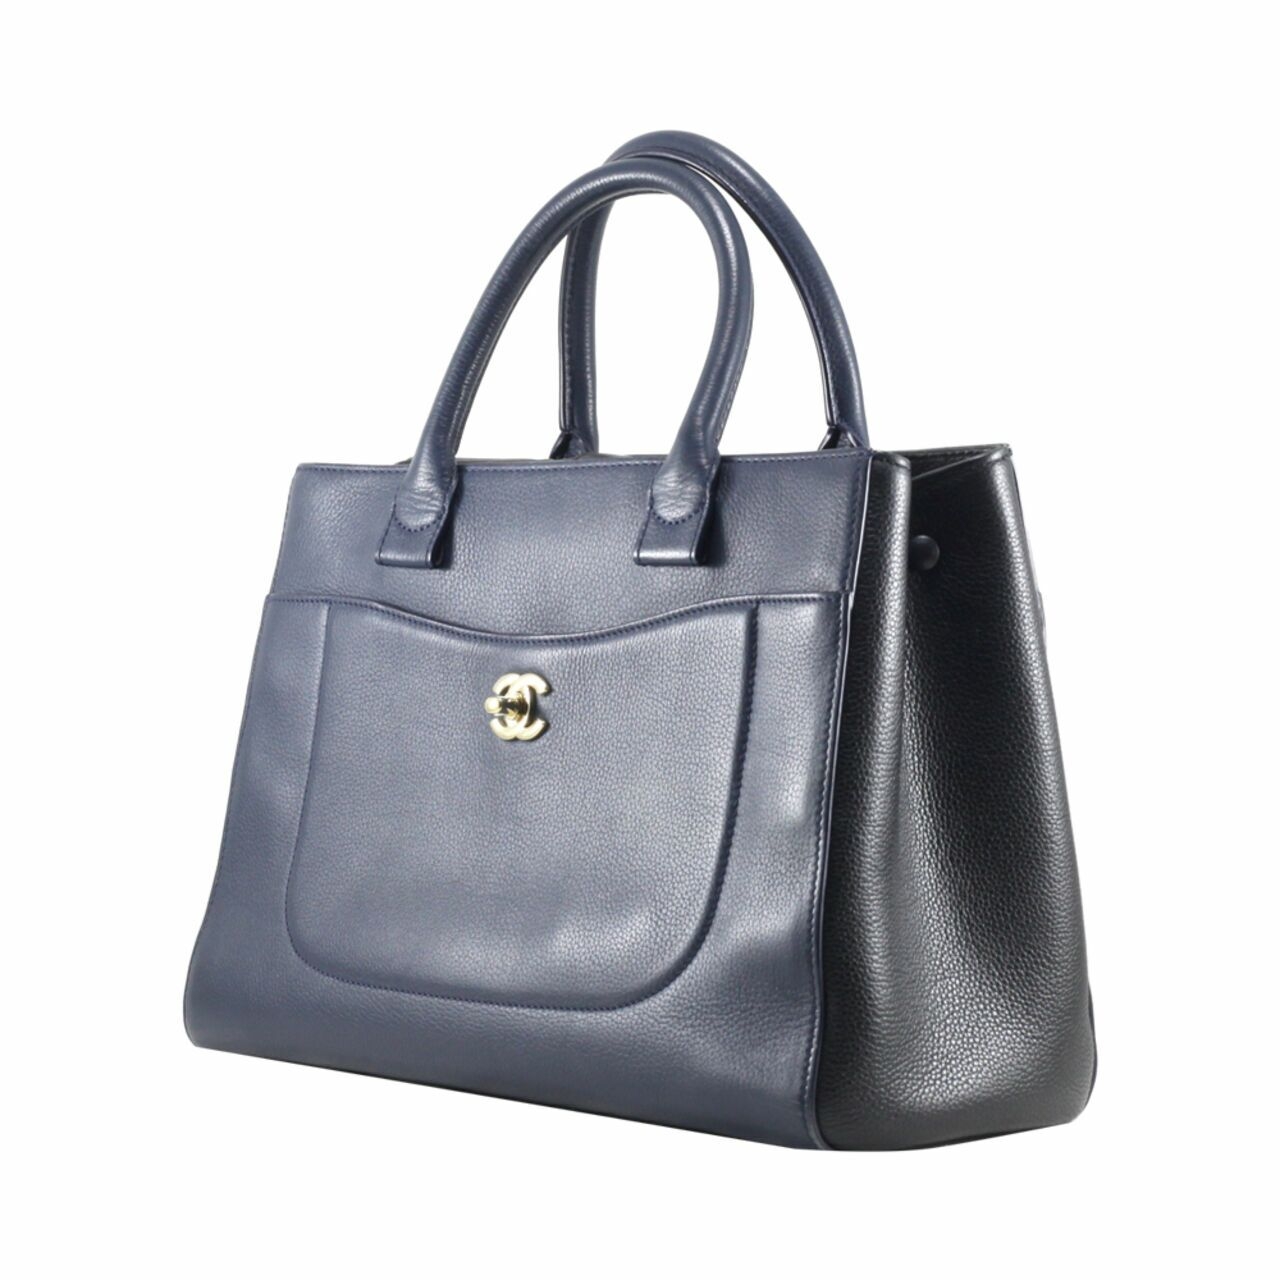 Chanel Blue Tote Bag